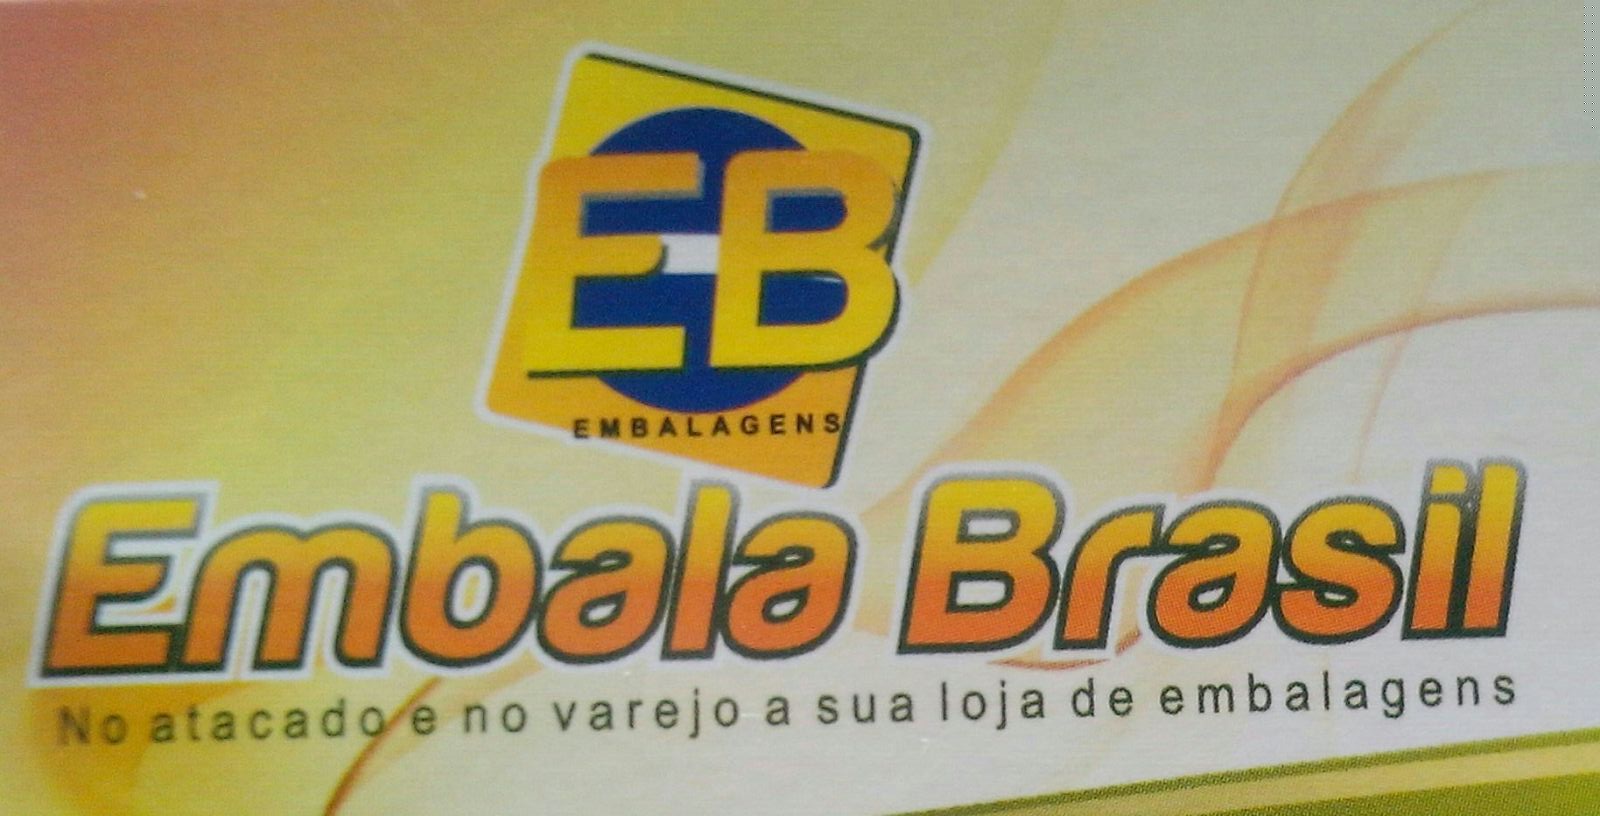 EMBALA BRASIL EMBALAGENS - Embalagens - Aracaju, SE